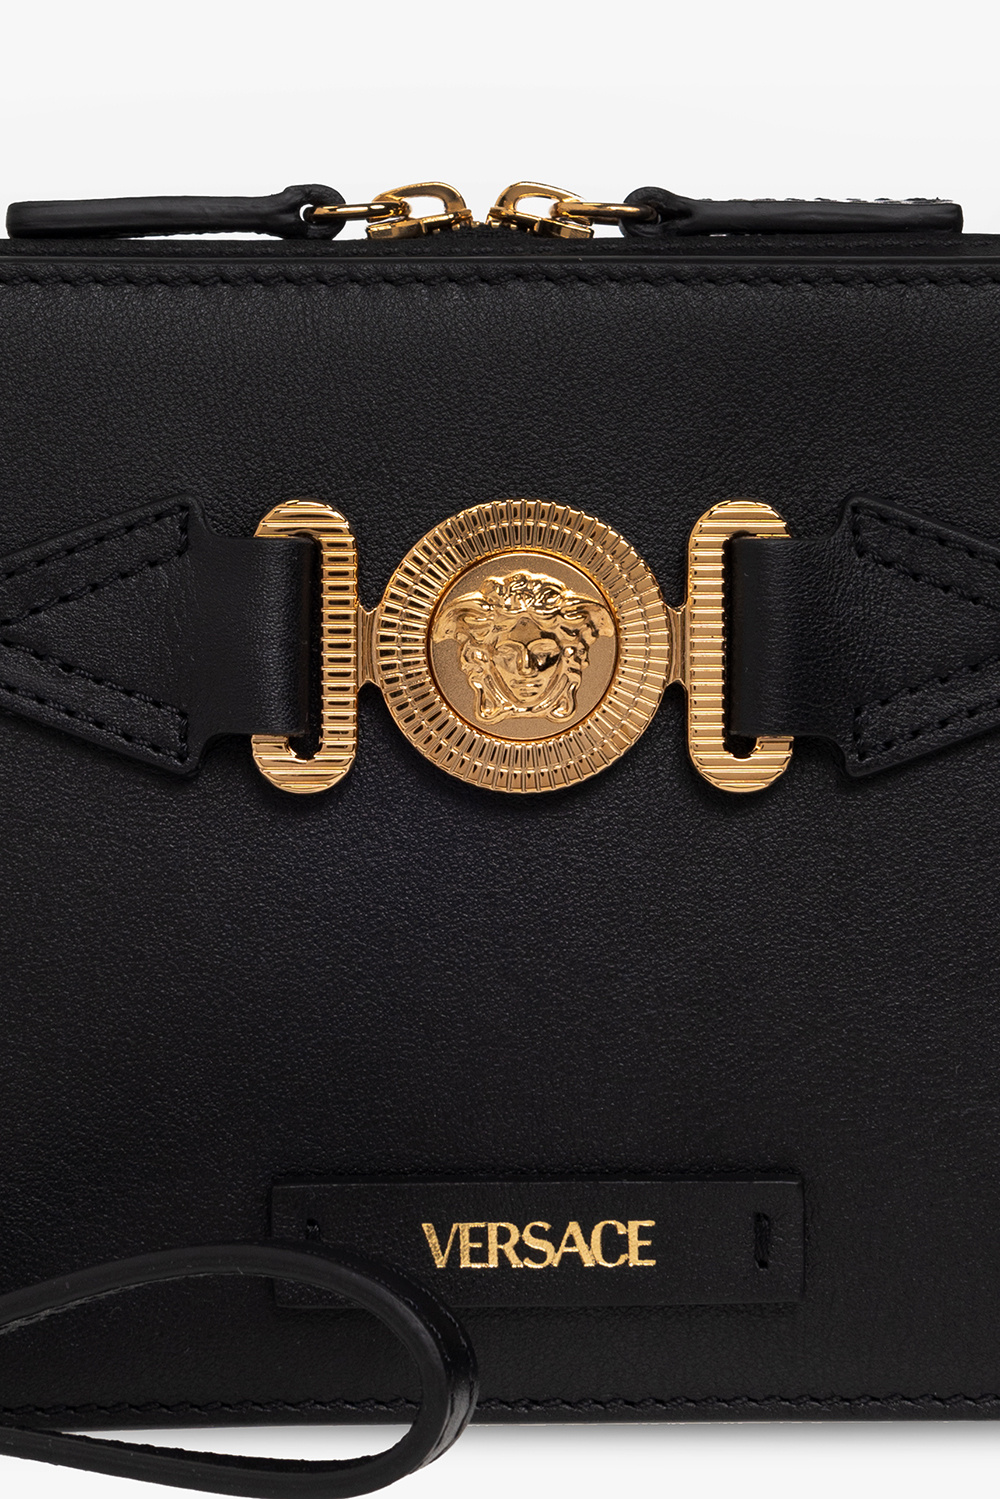 Versace Leather shoulder bag with logo